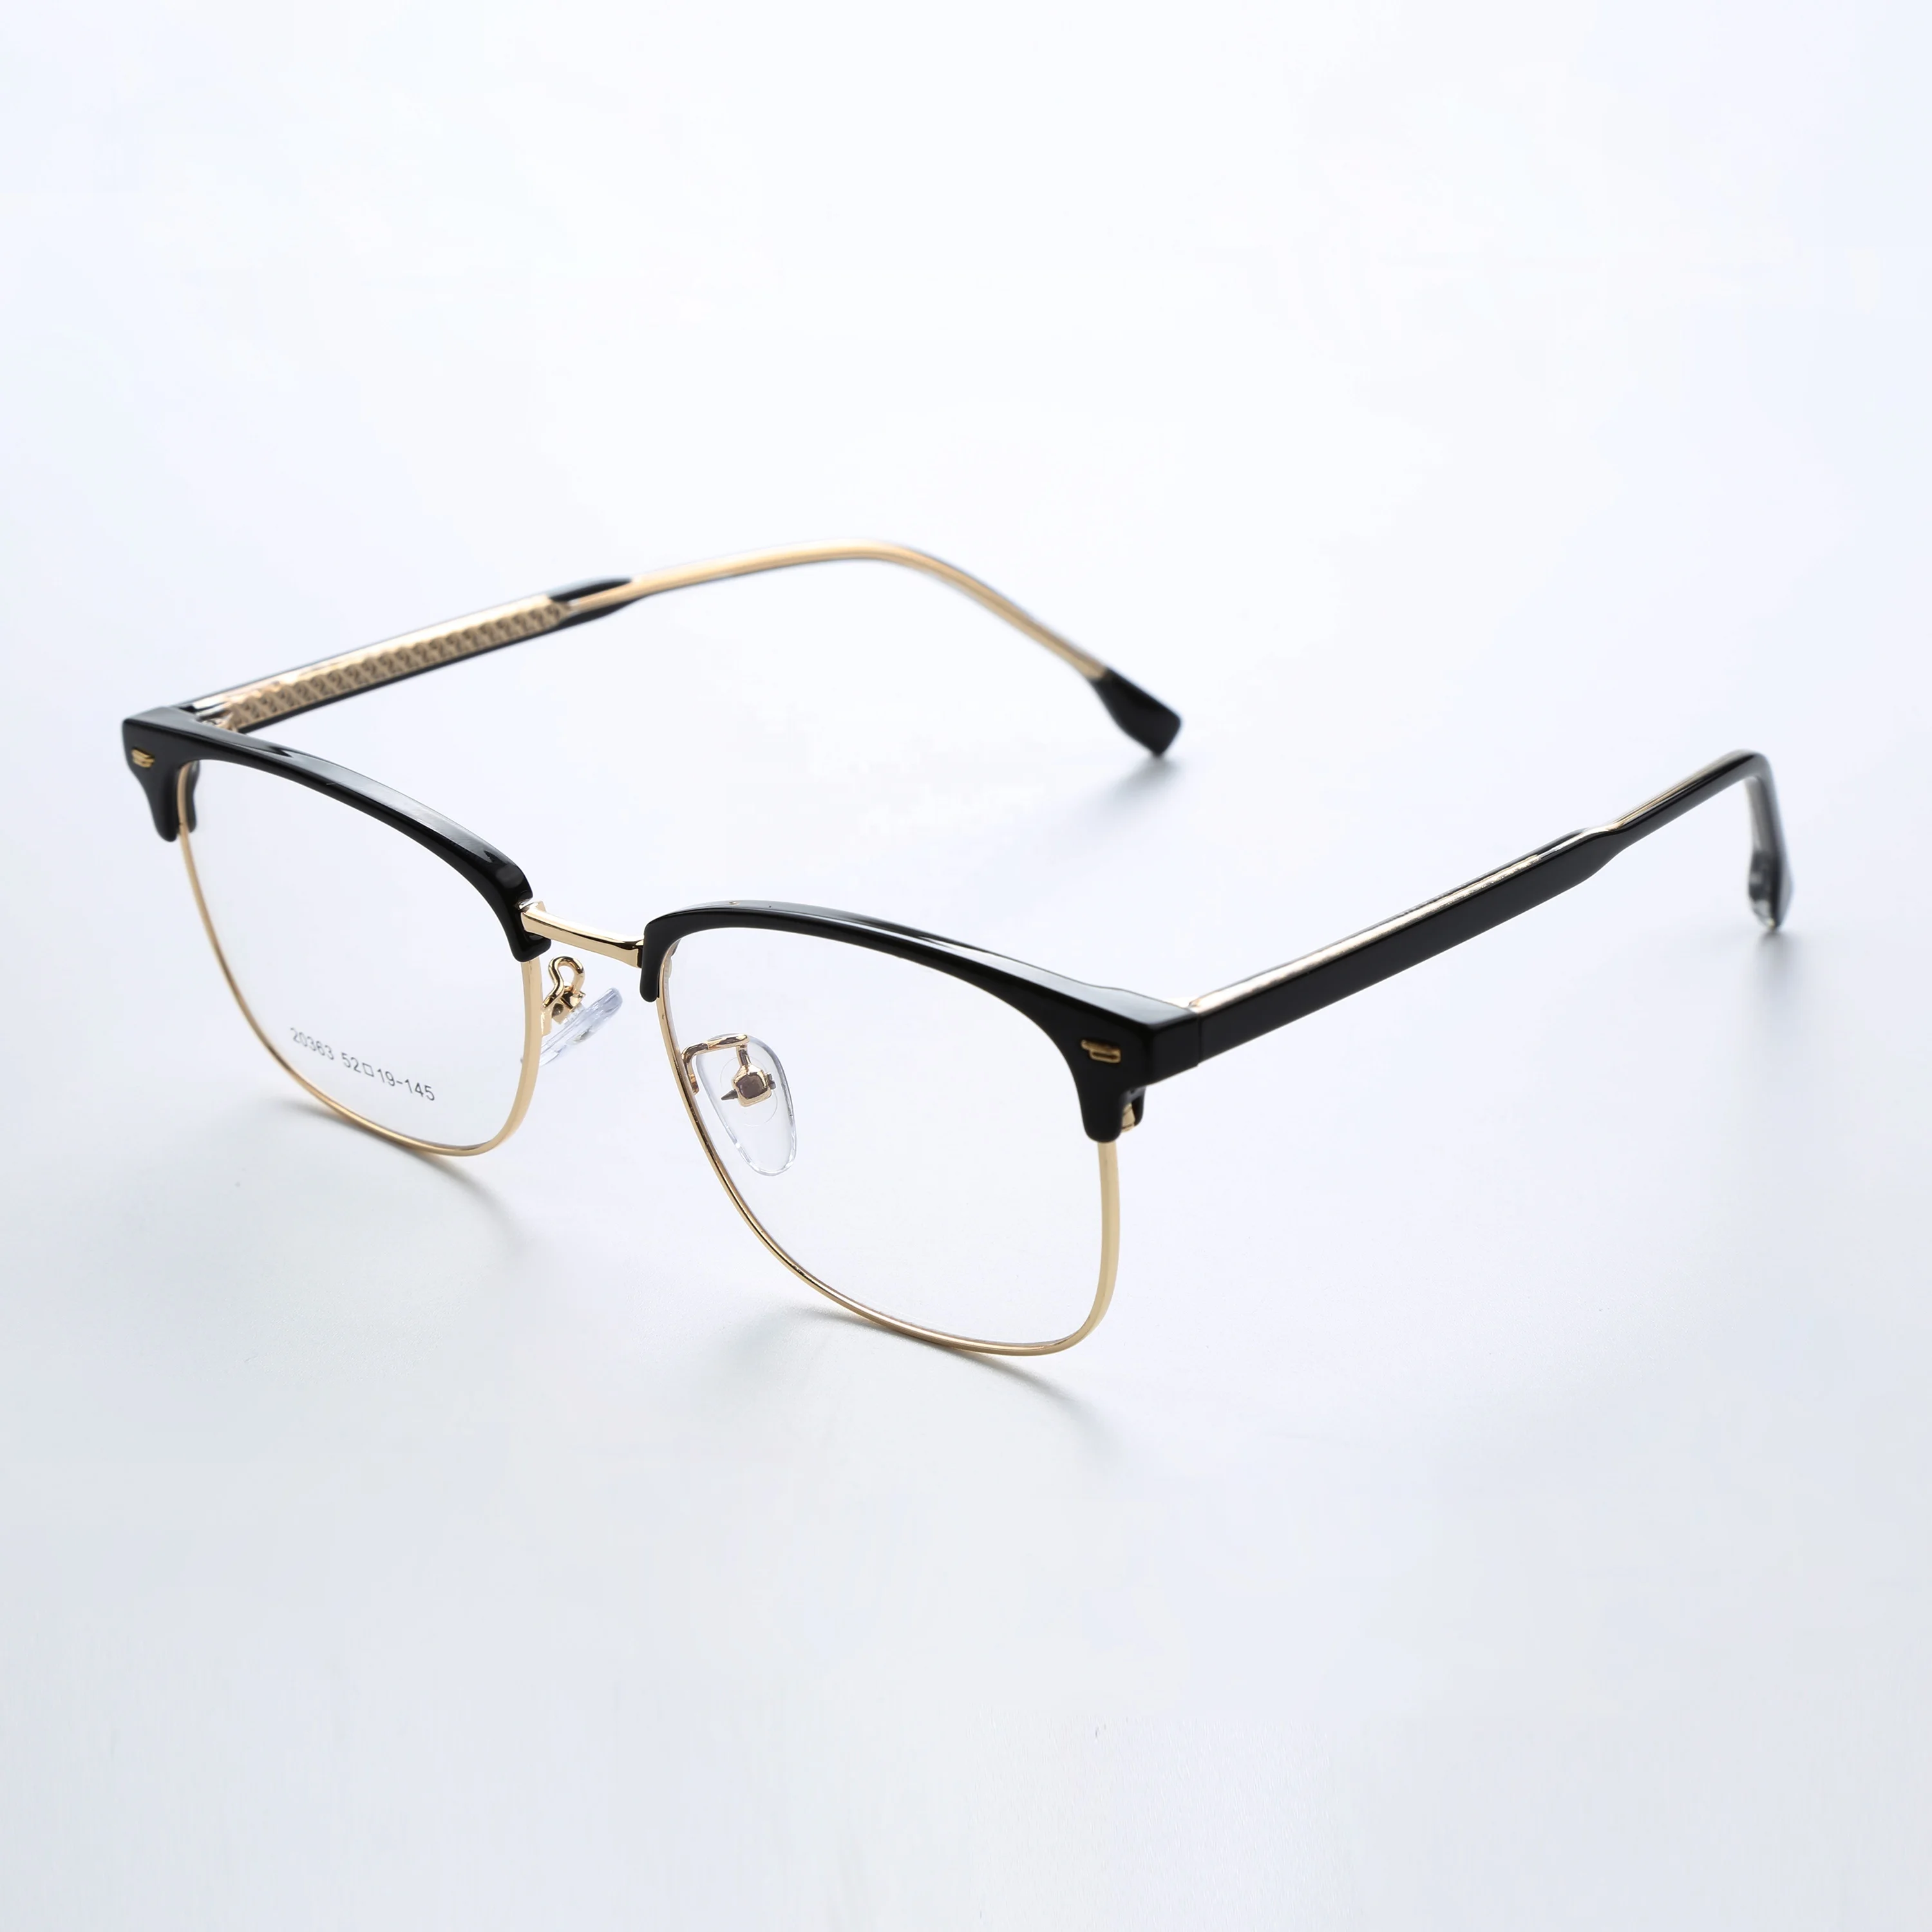 Japan Tag is an exciting frame design by Düsseldorf Eyewear 